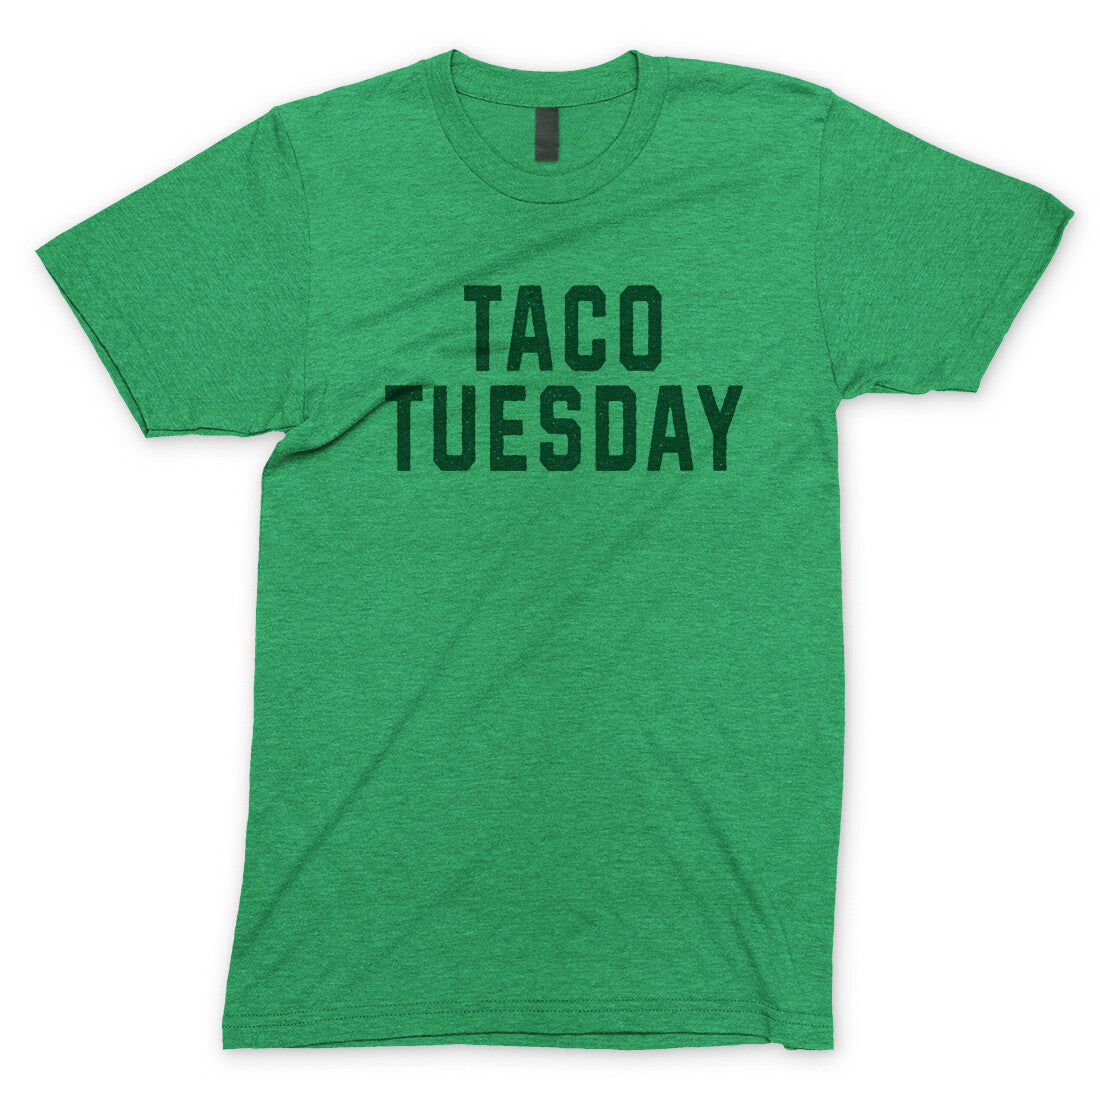 Taco Tuesday in Heather Irish Green Color